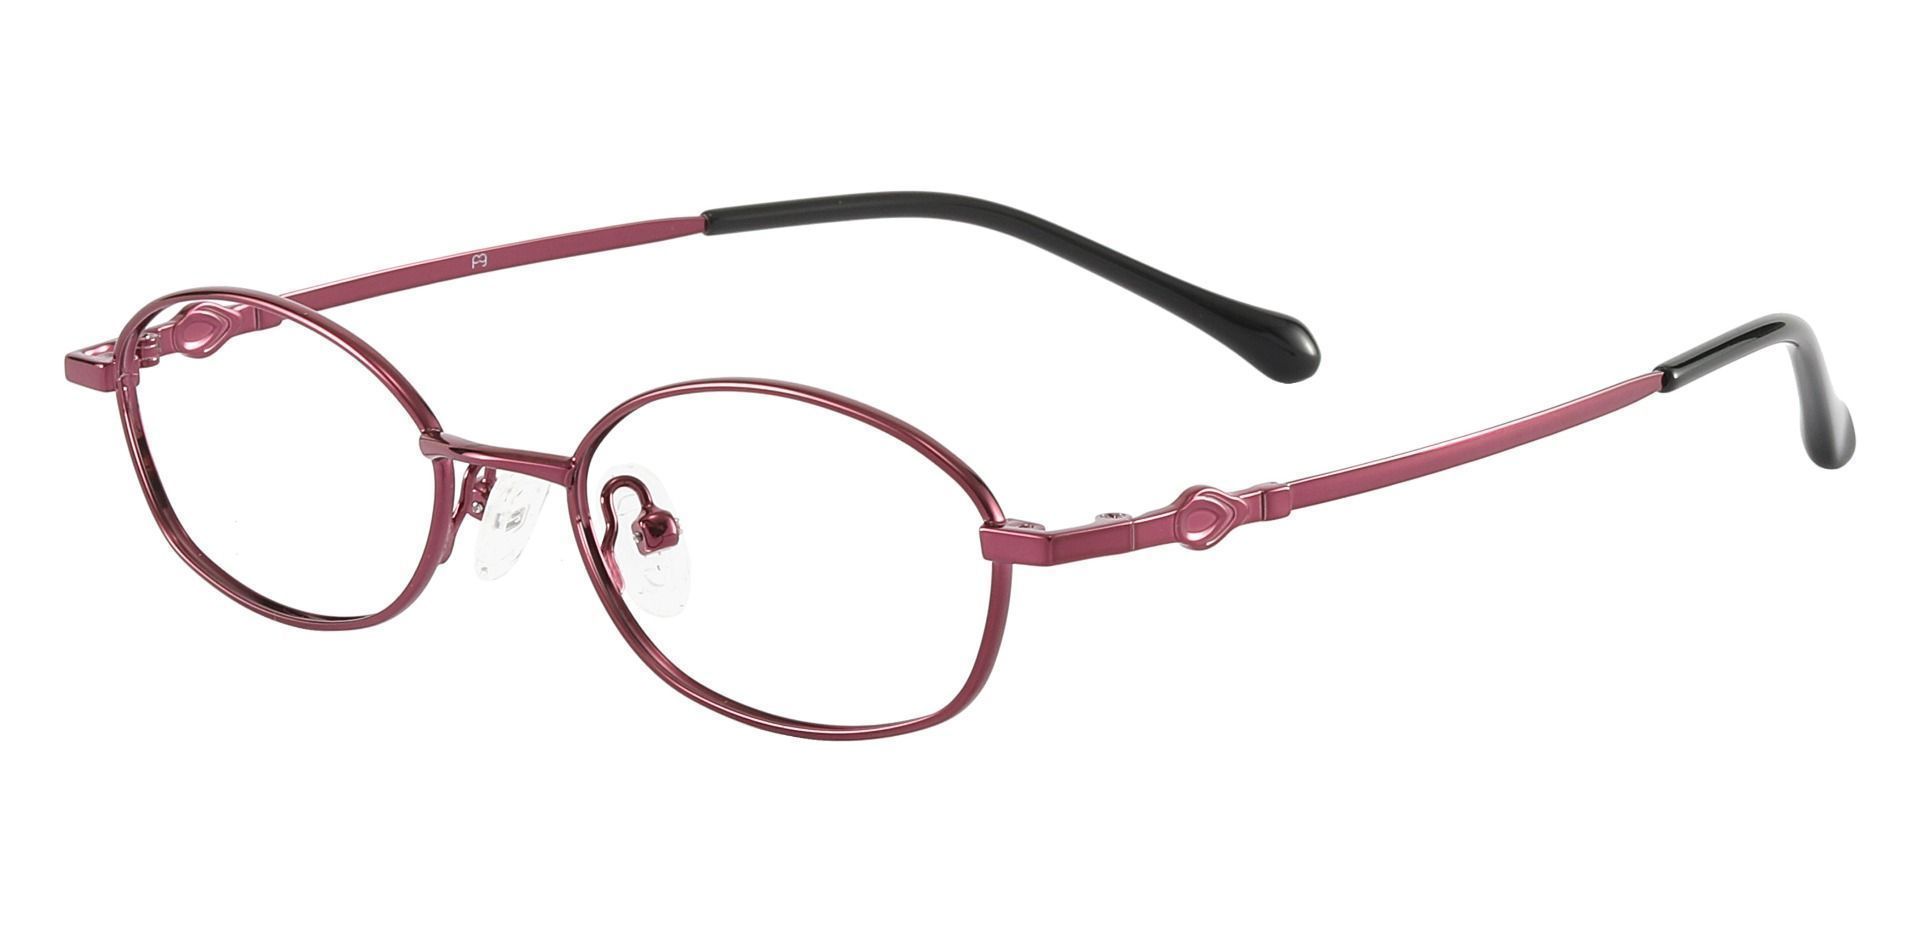 Fletcher Oval Eyeglasses Frame - Purple